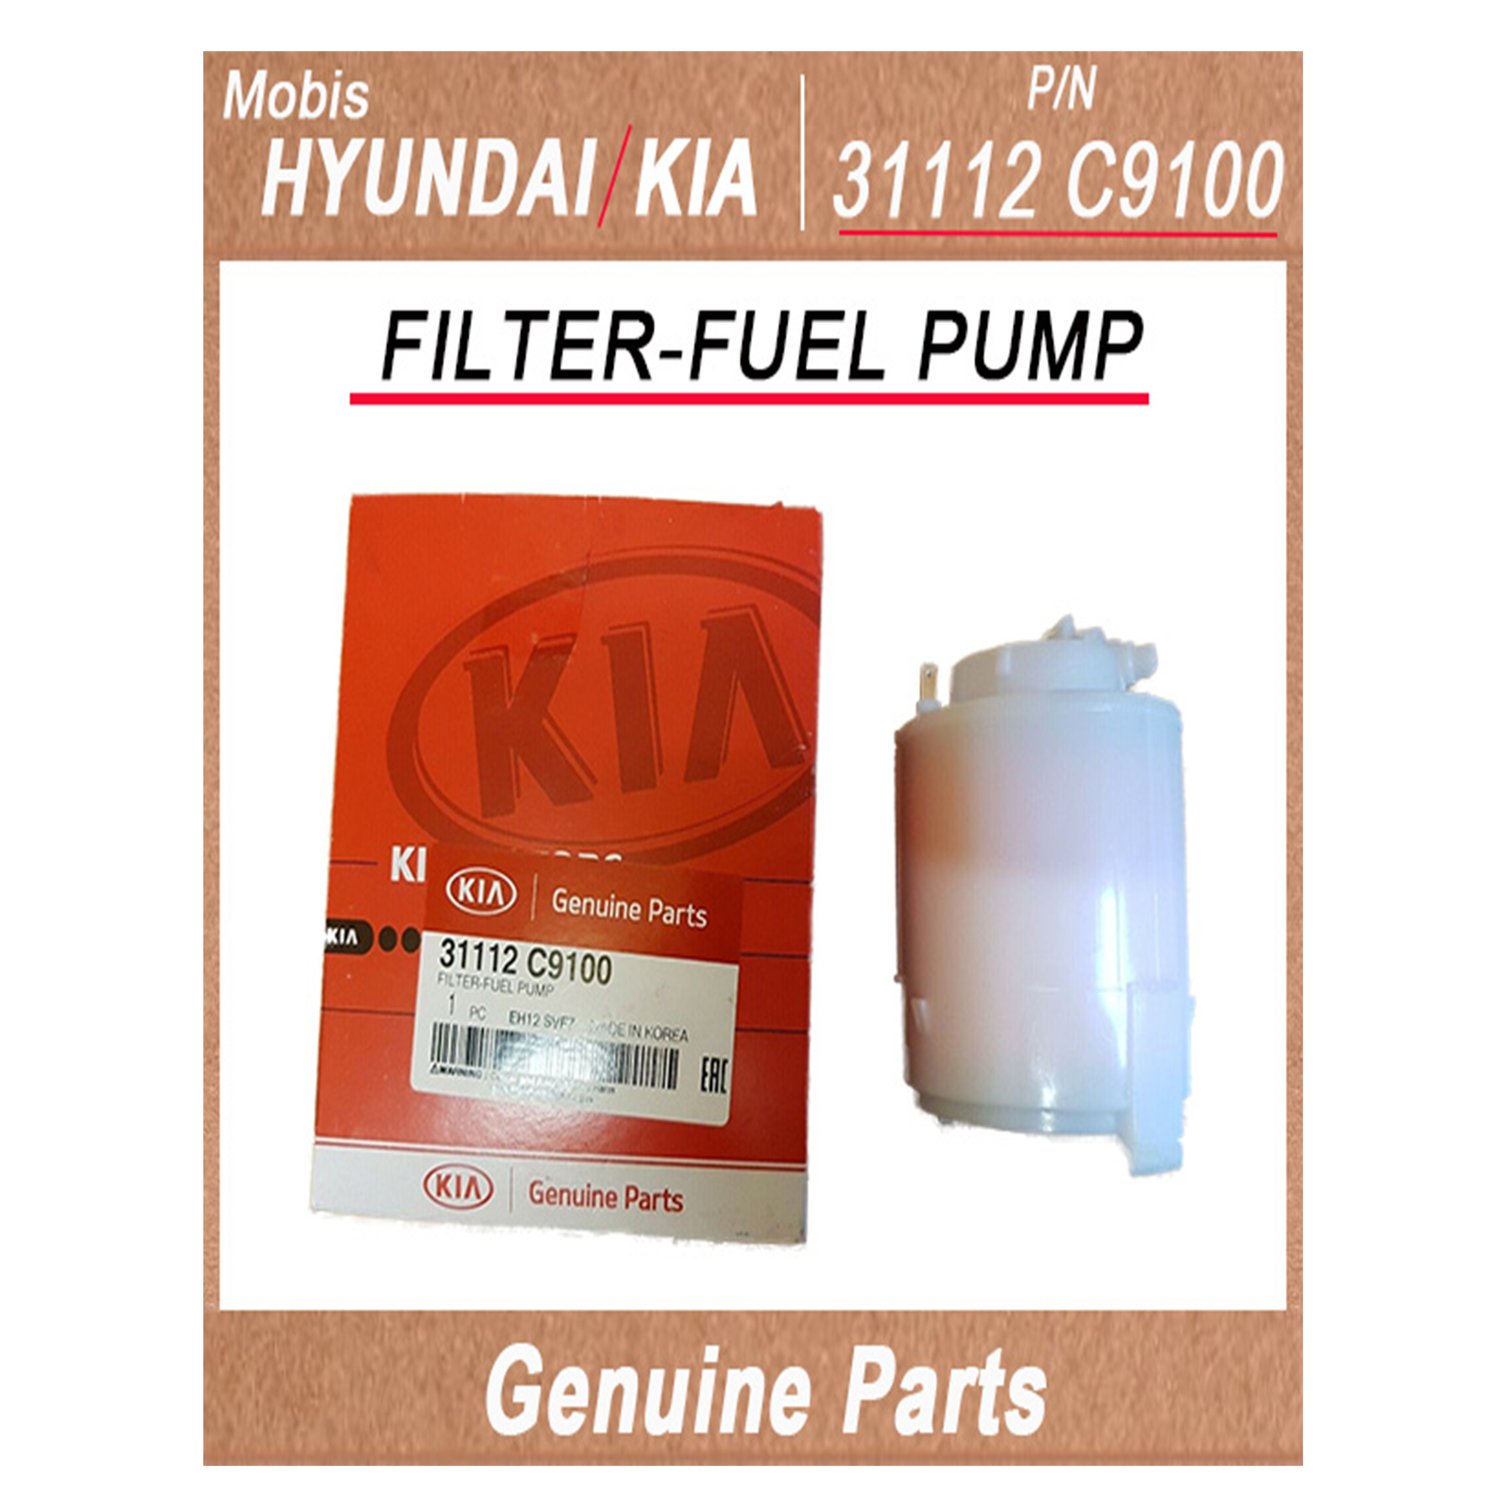 31112C9100 _ FILTER_FUEL PUMP _ Genuine Korean Automotive Spare Parts _ Hyundai Kia _Mobis_